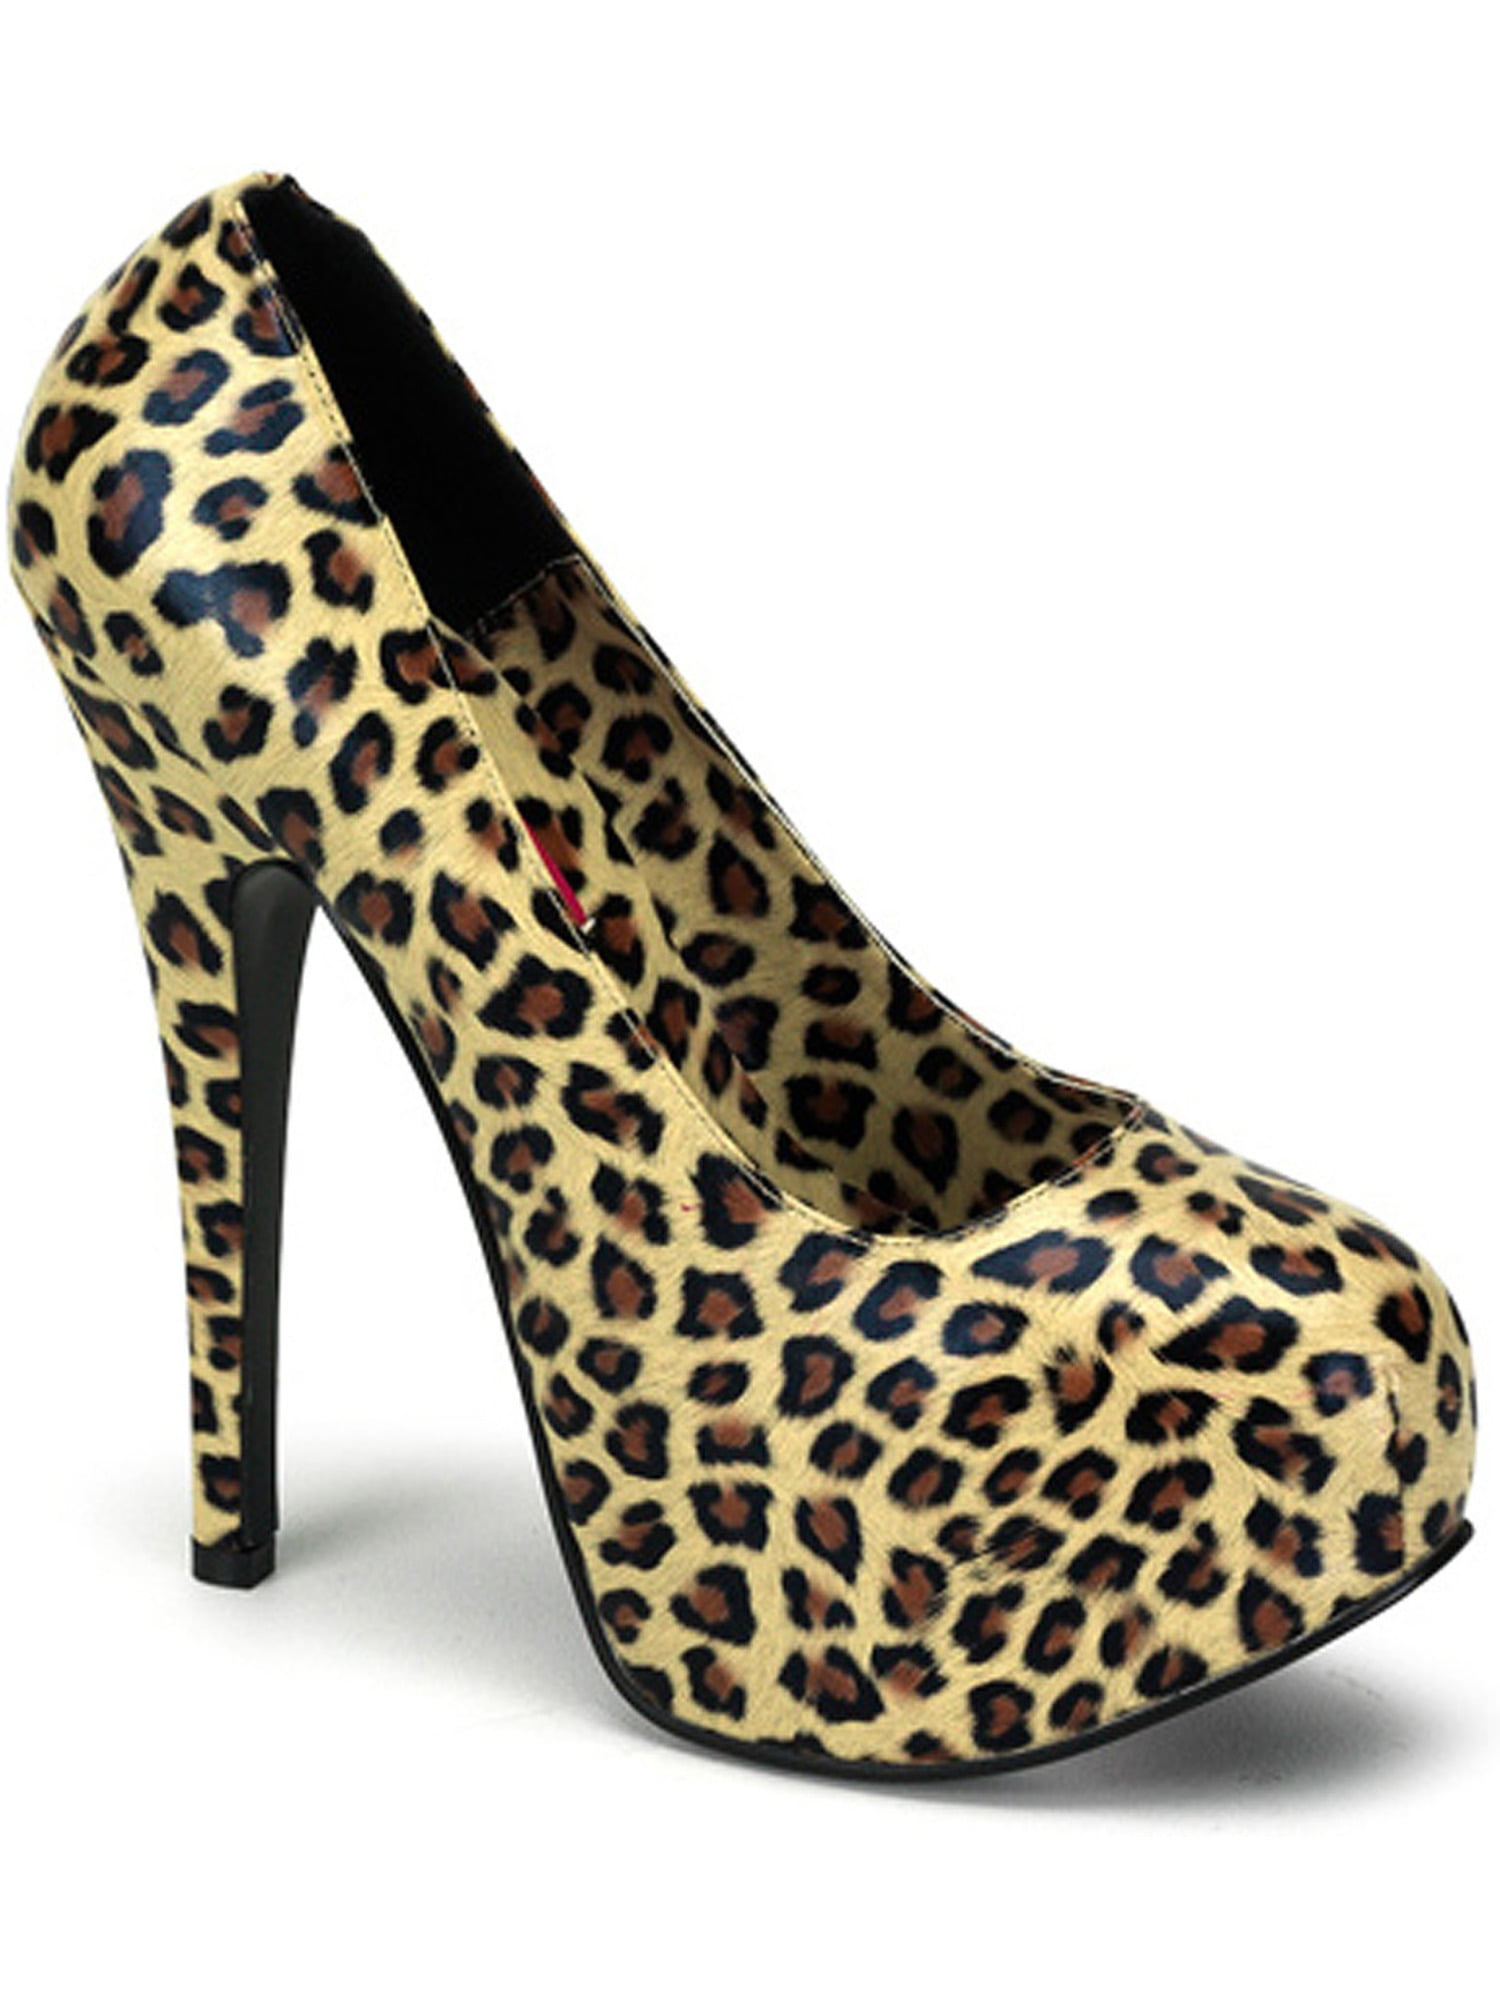 3 inch leopard print heels